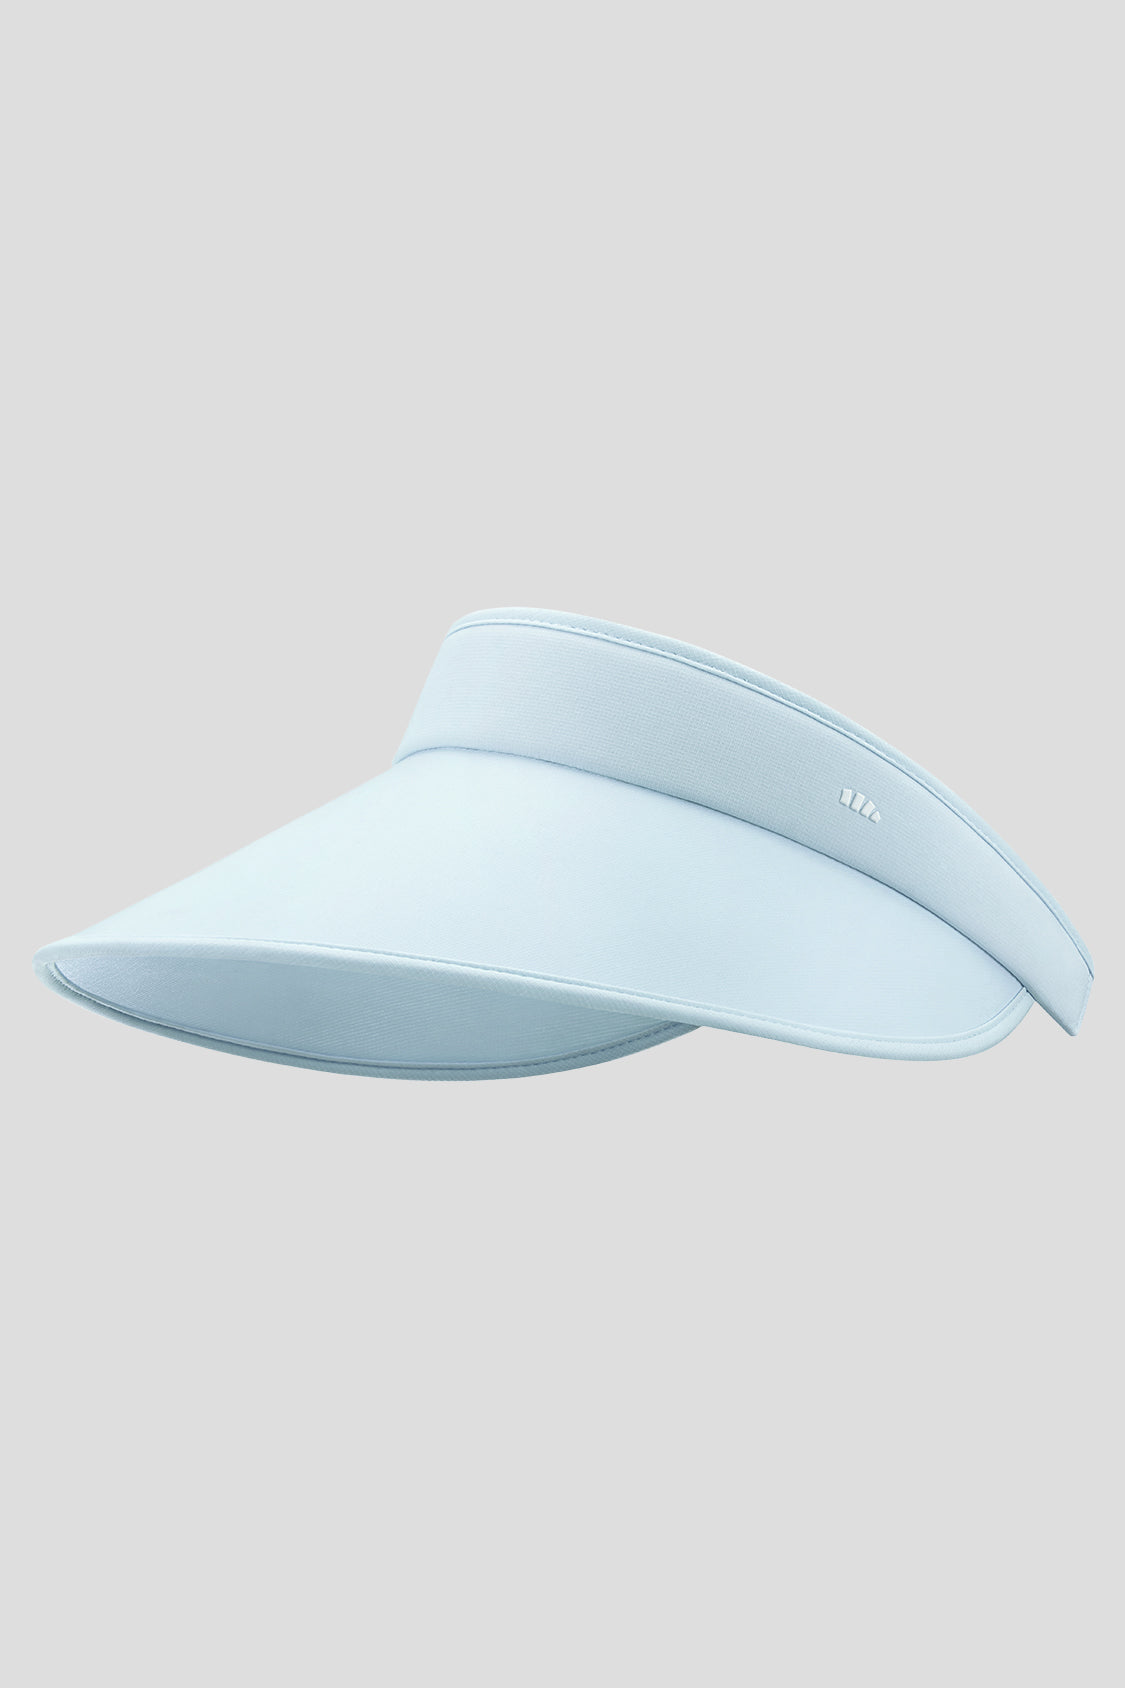 Ultralight Sun Hat - Mist Blue - P